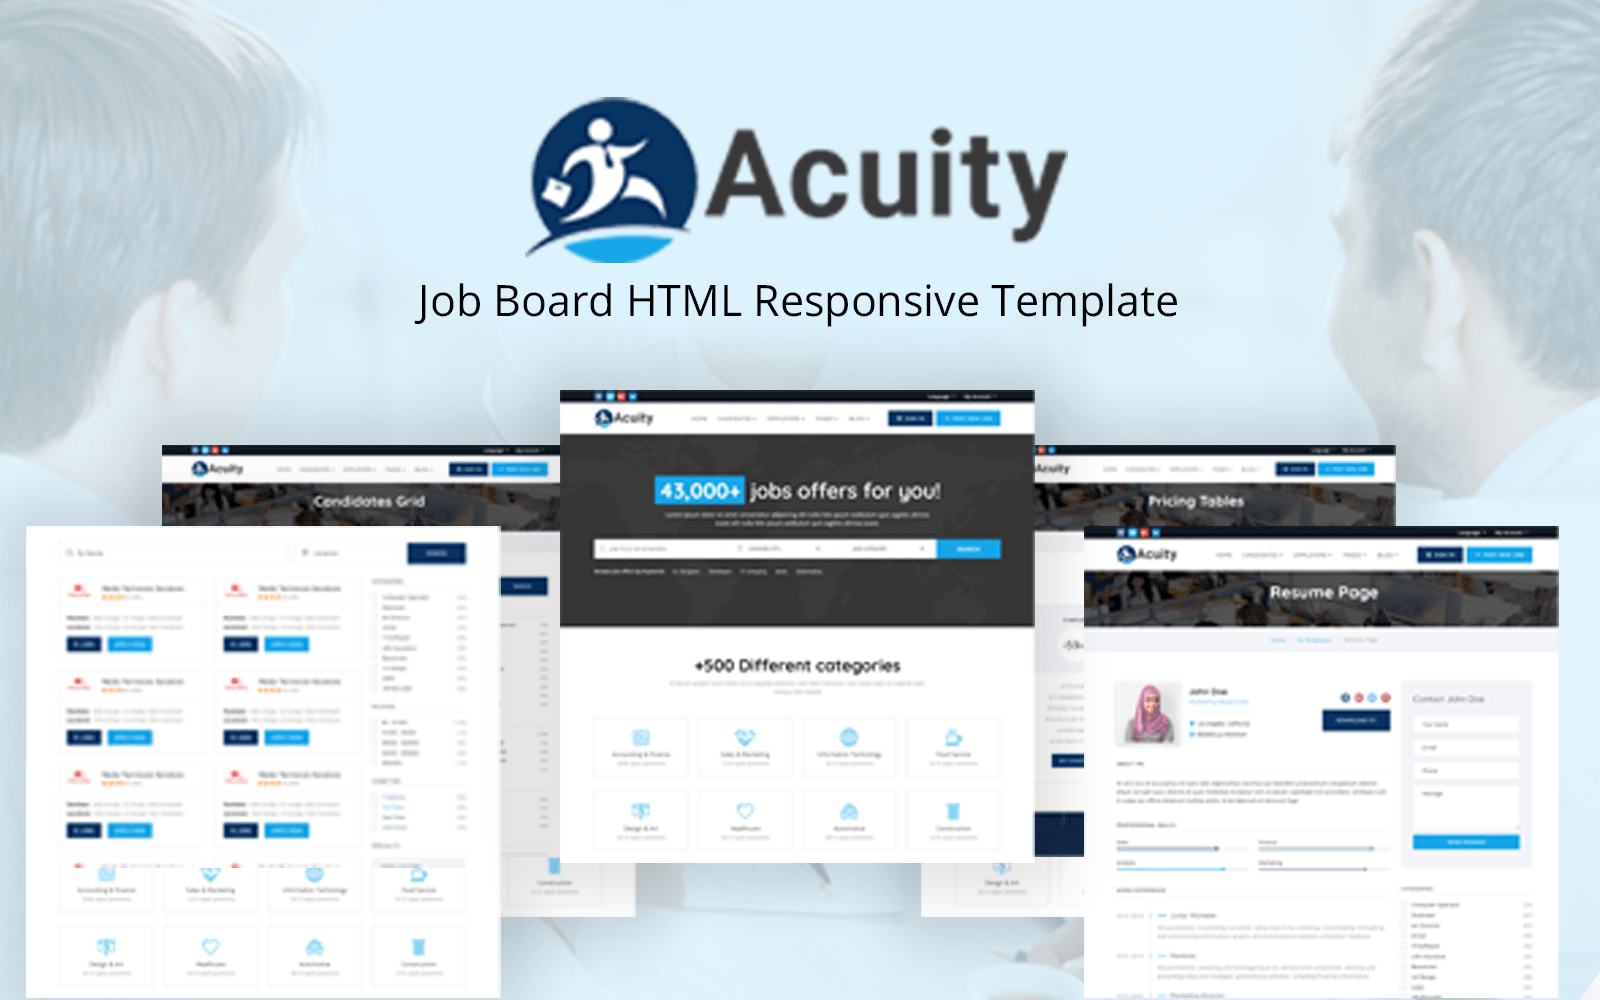 Acuity - Job Board HTML Responsive Website Template